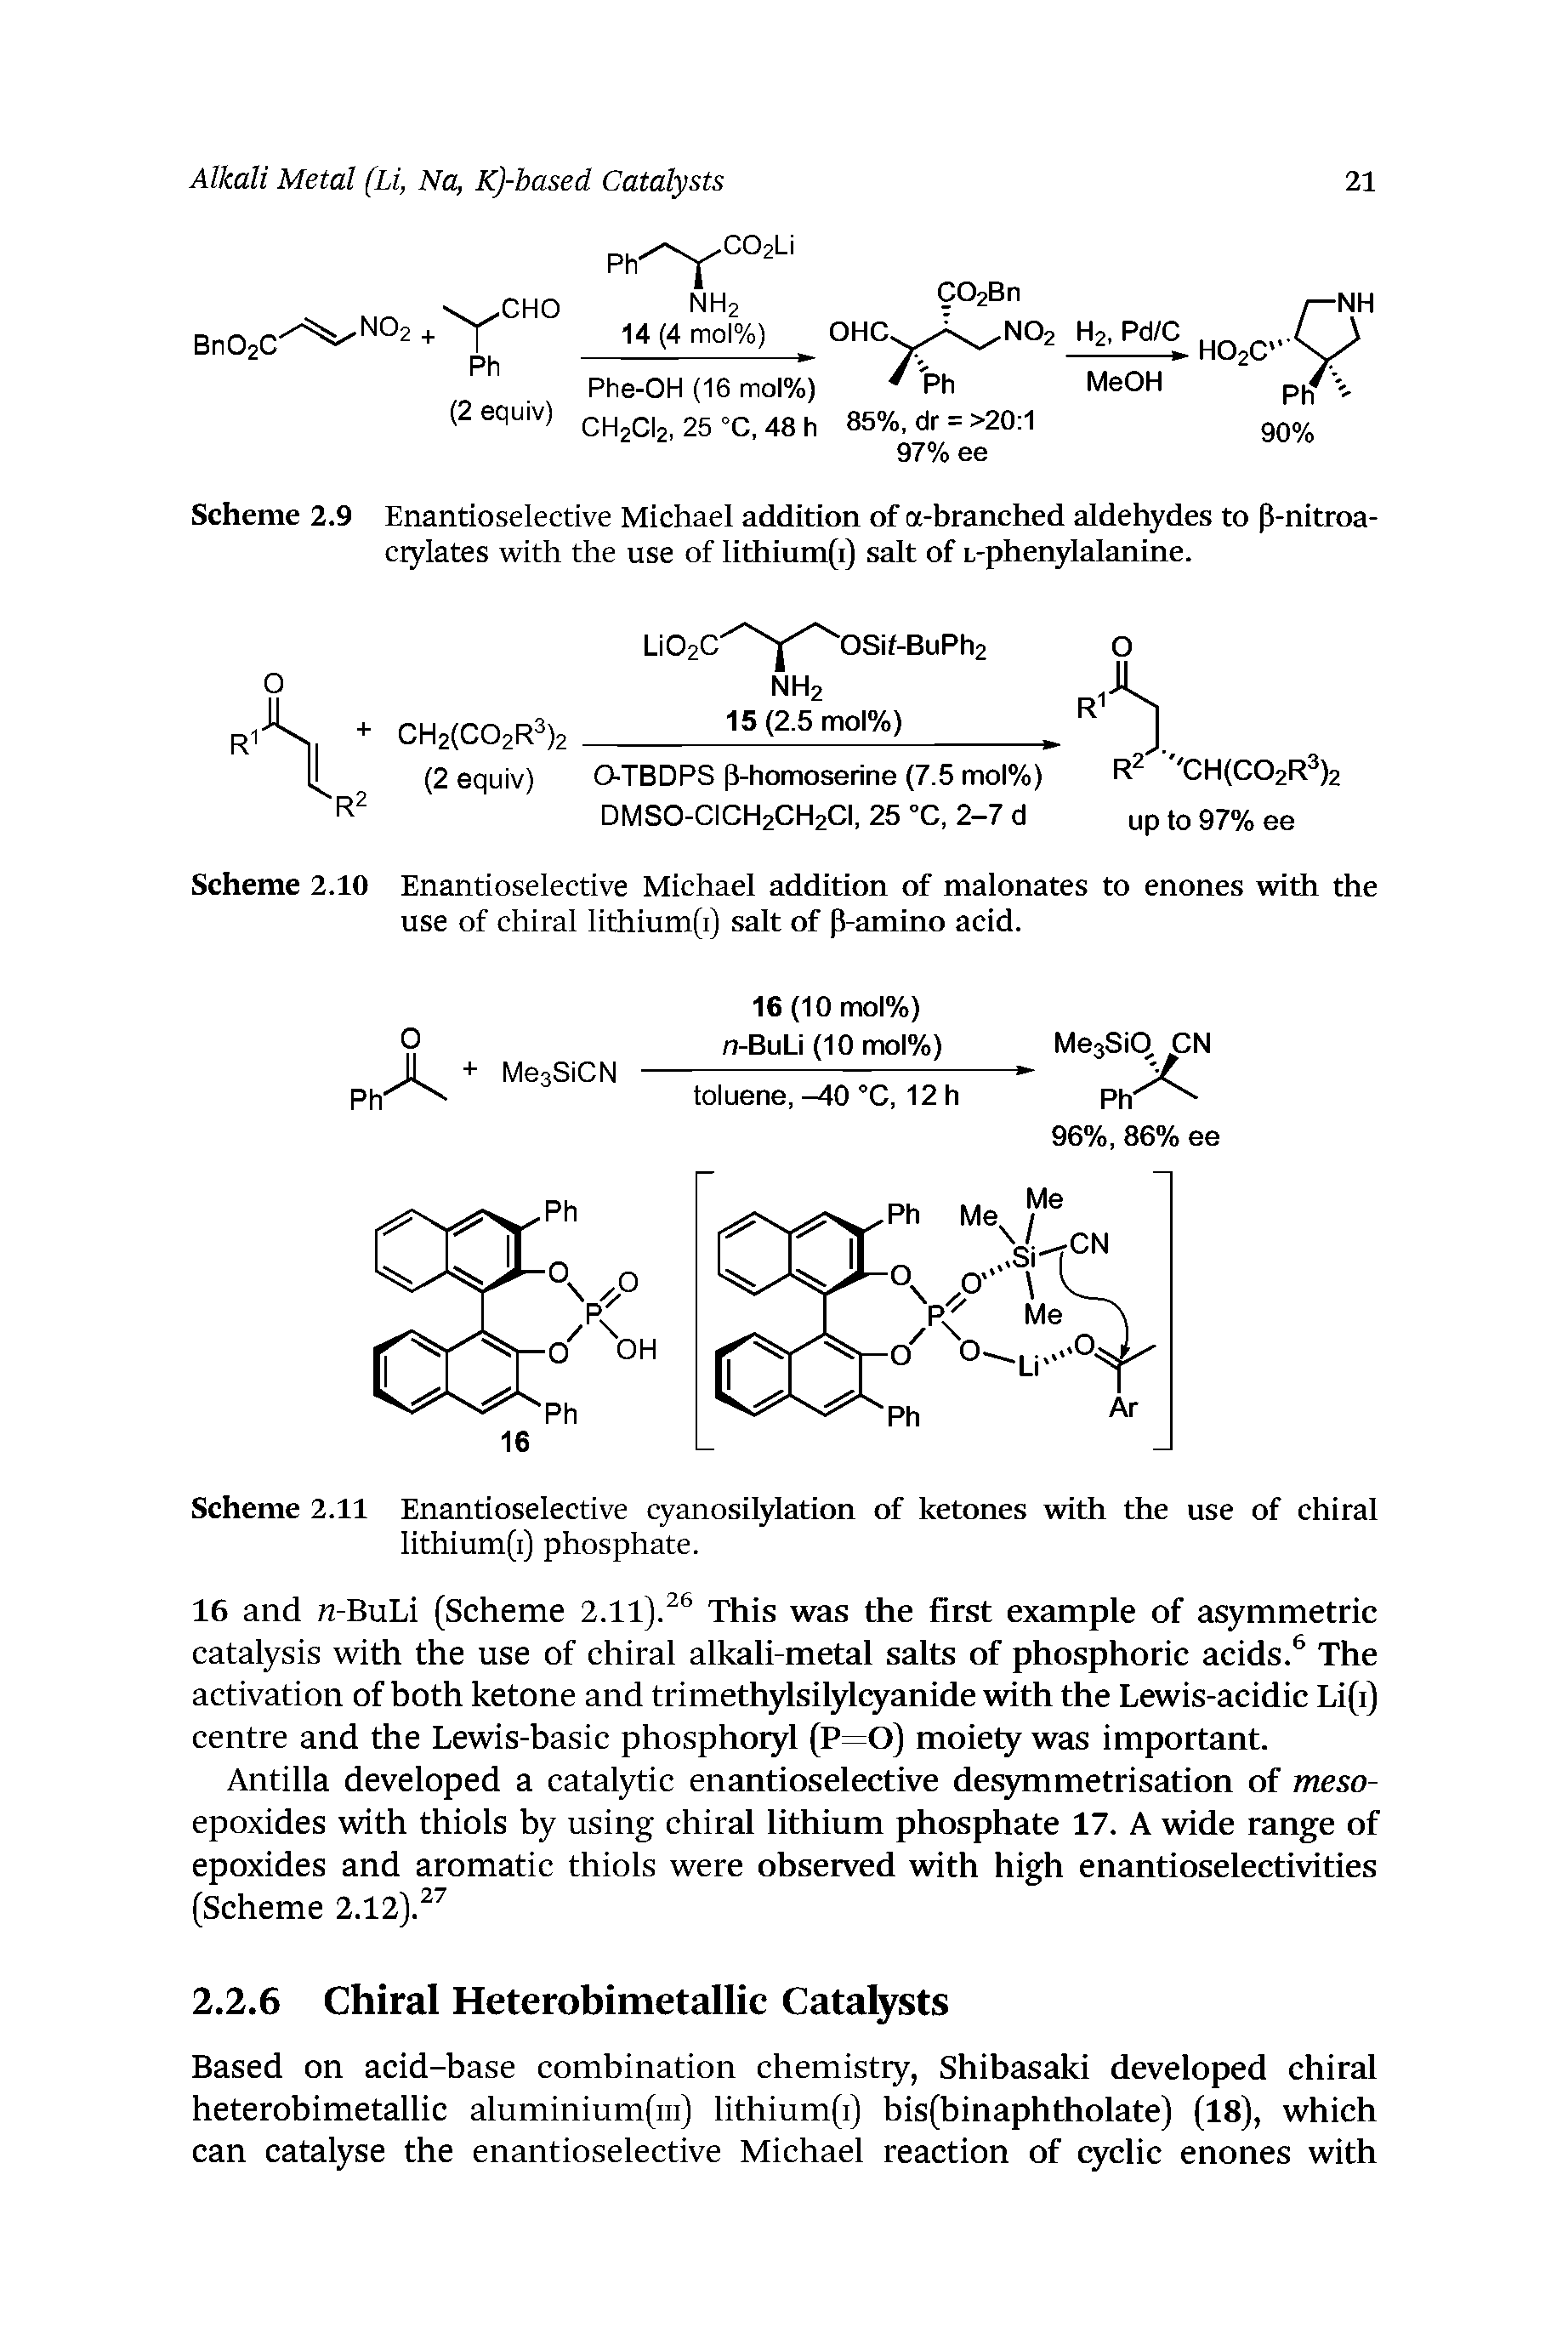 Scheme 2.11 Enantioselective cyanosilylation of ketones with the use of chiral lithium(i) phosphate.